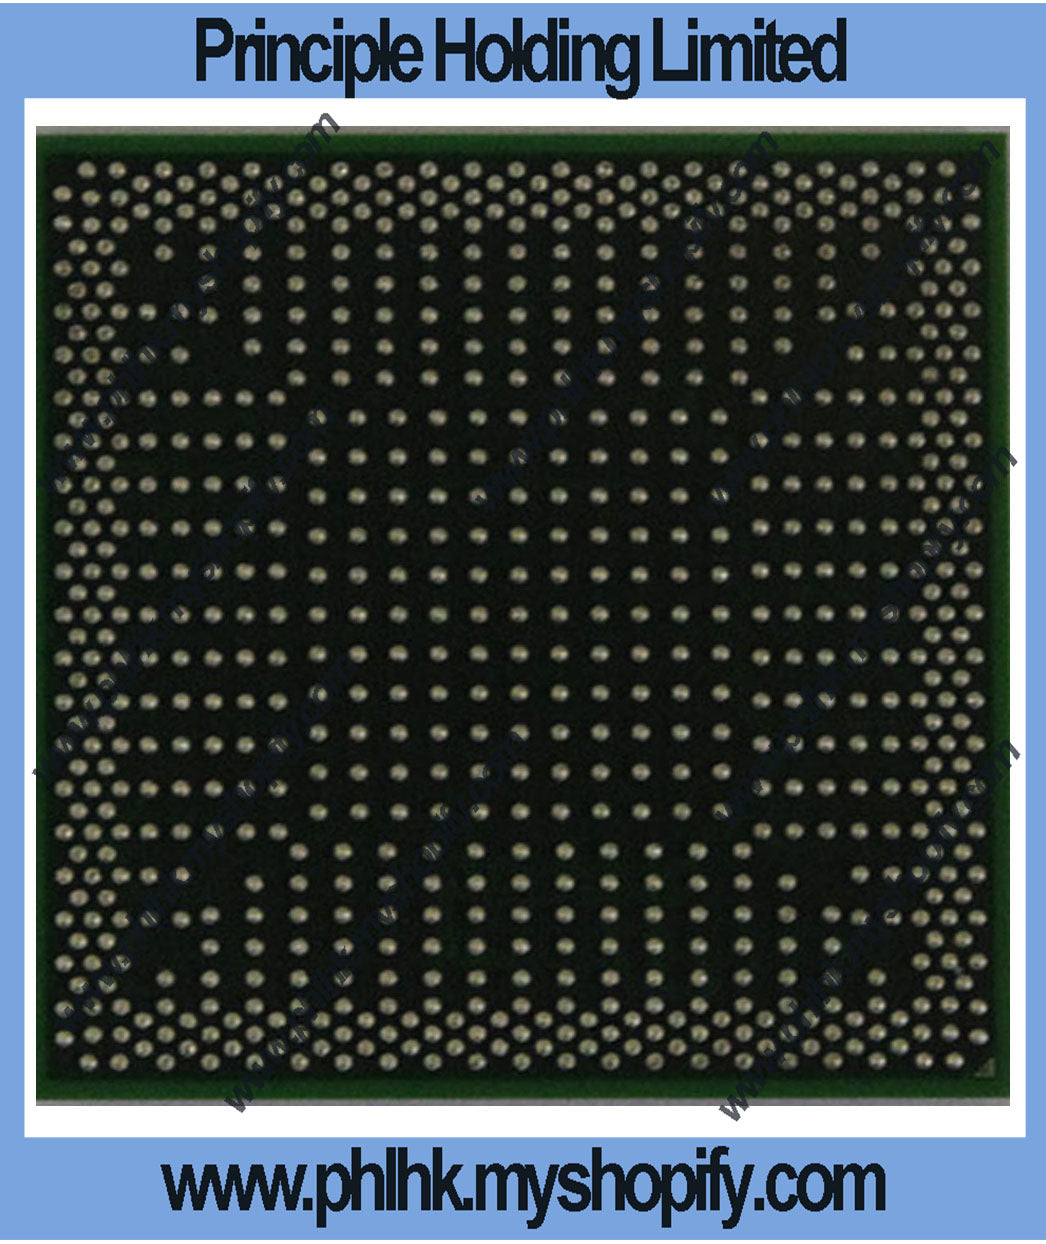 CPU/Microprocessors socket FT3 AMD E1-2100 1000MHz (Kabini, 1024Kb L2 Cache, EM2100ICJ23HM) - AMD - Kabini - Processors - Electr.Store